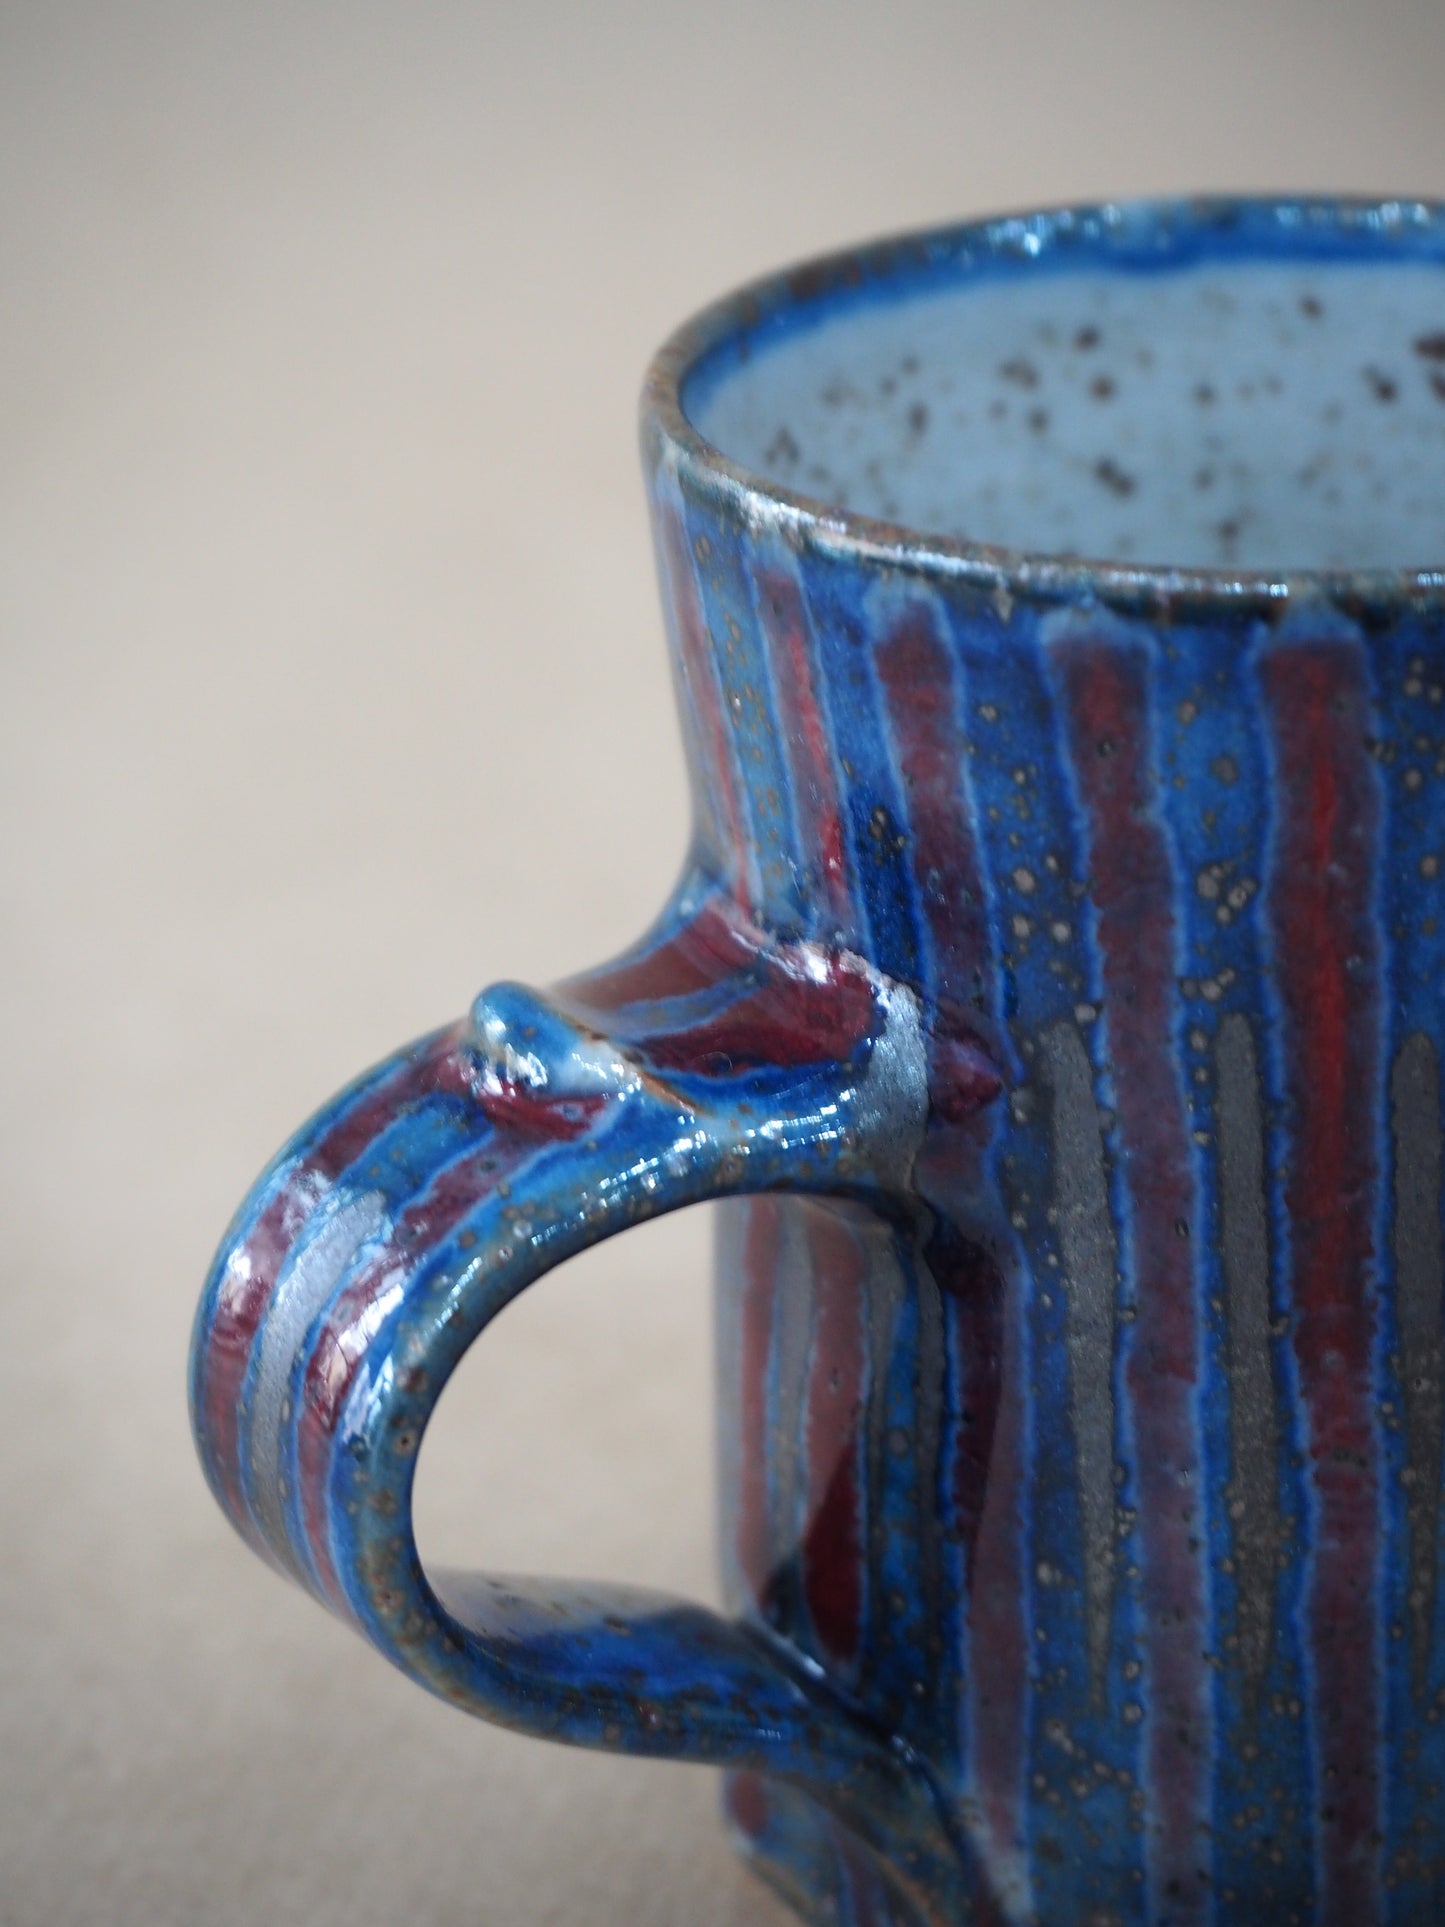 Goldsmith, Robert – Small Red, Blue & Silver Pinstripe Mug